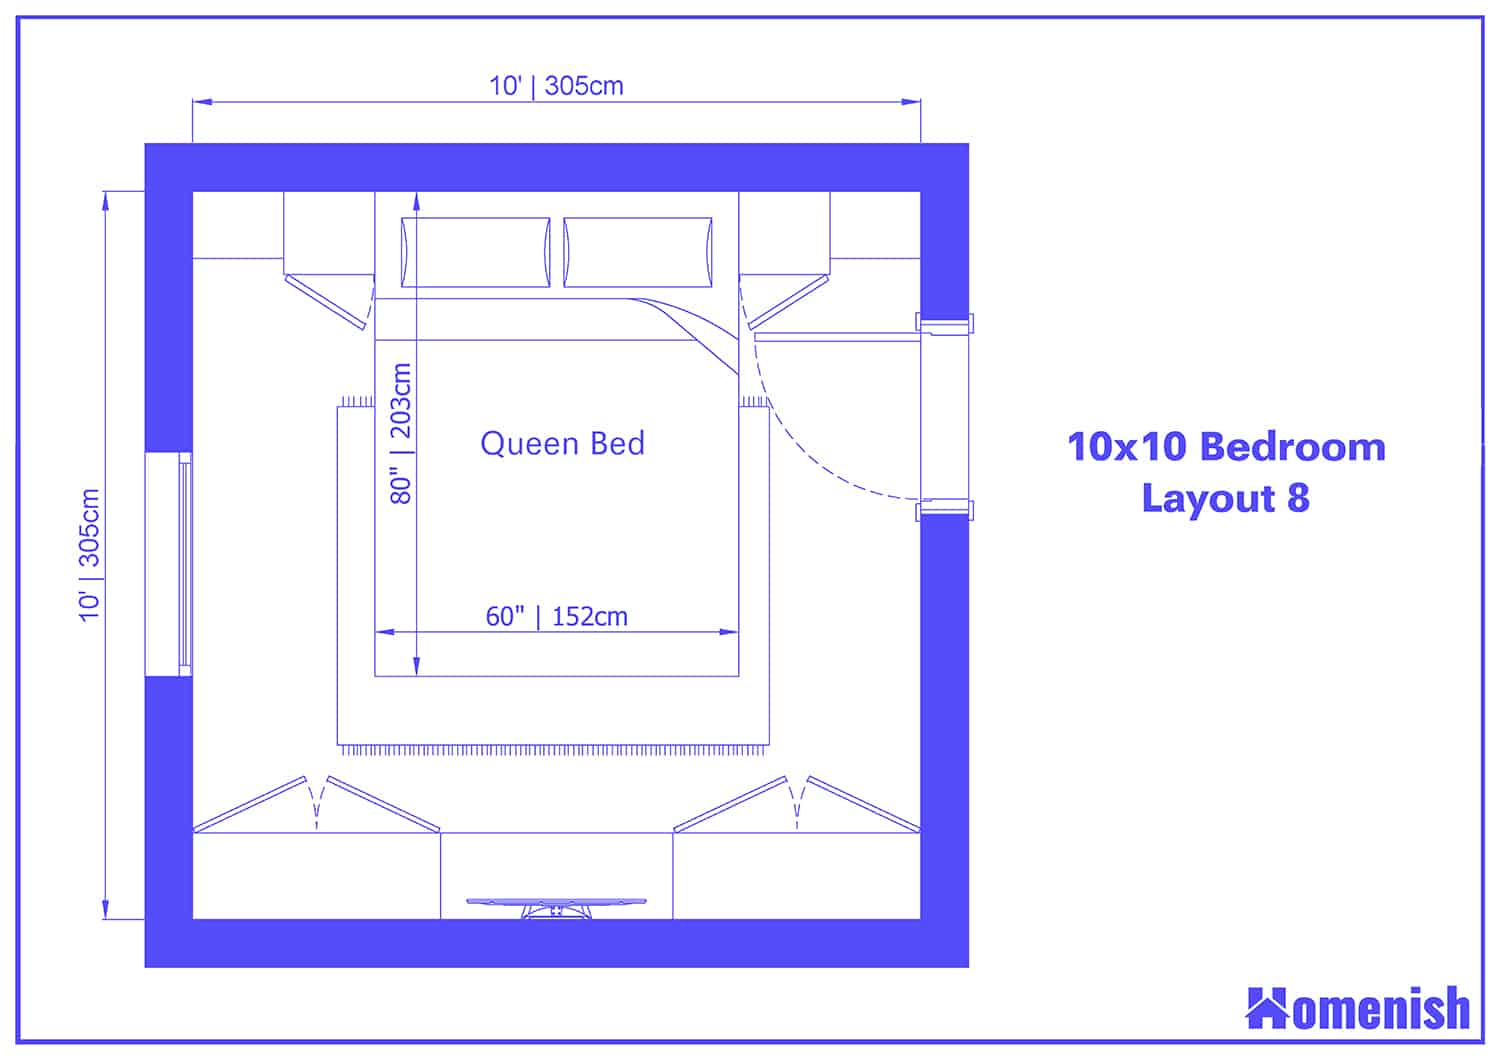 10x10 Bedroom Layout 8